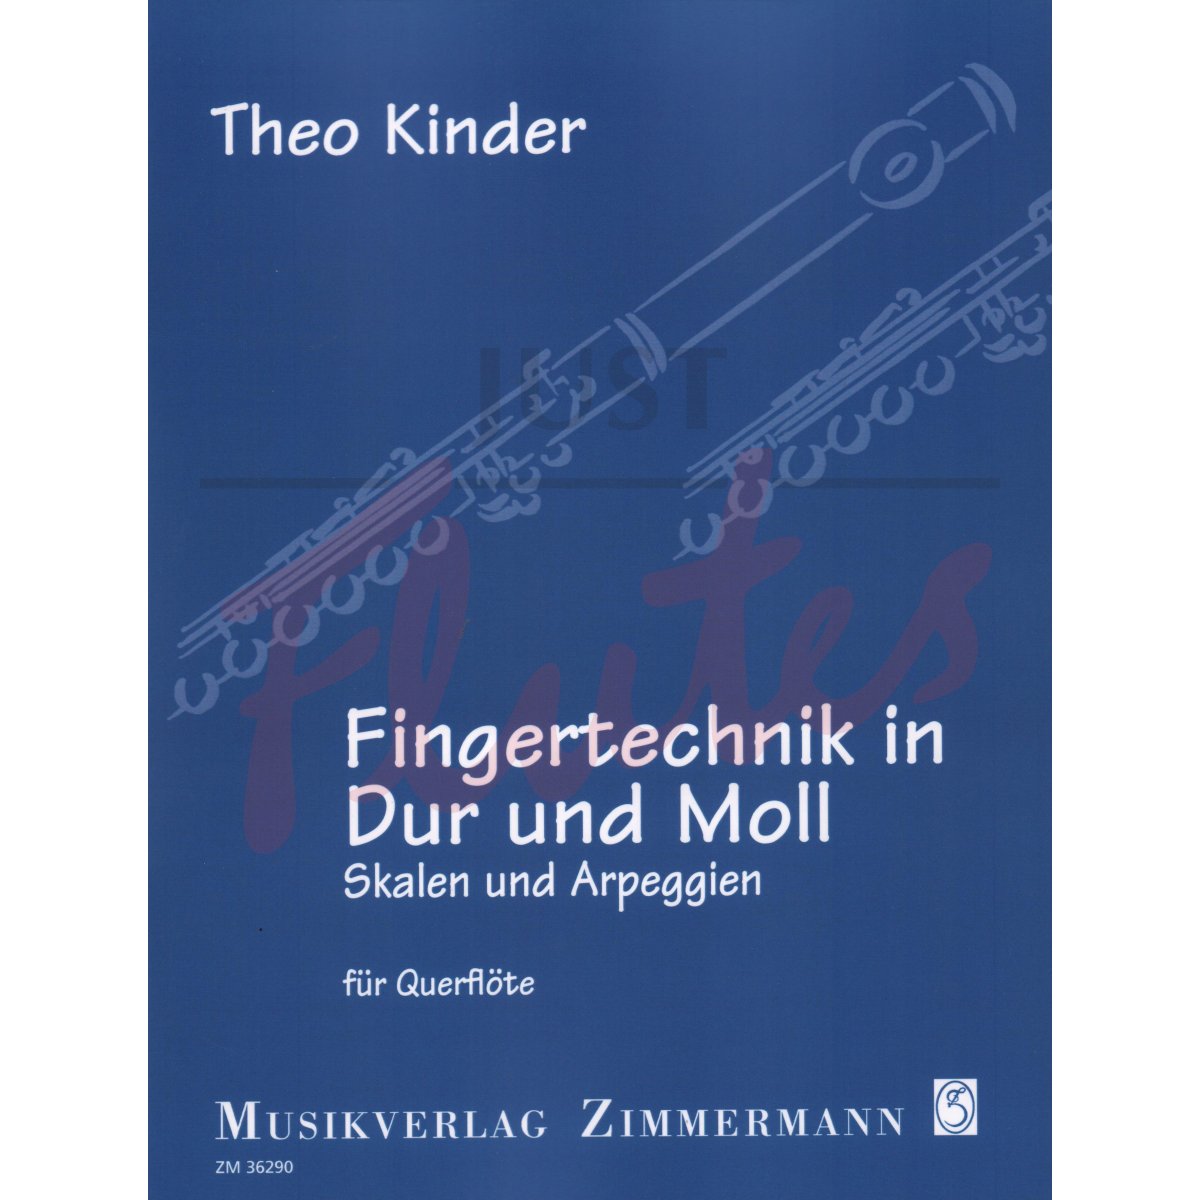 Finger Technique in Major and Minor for Flute